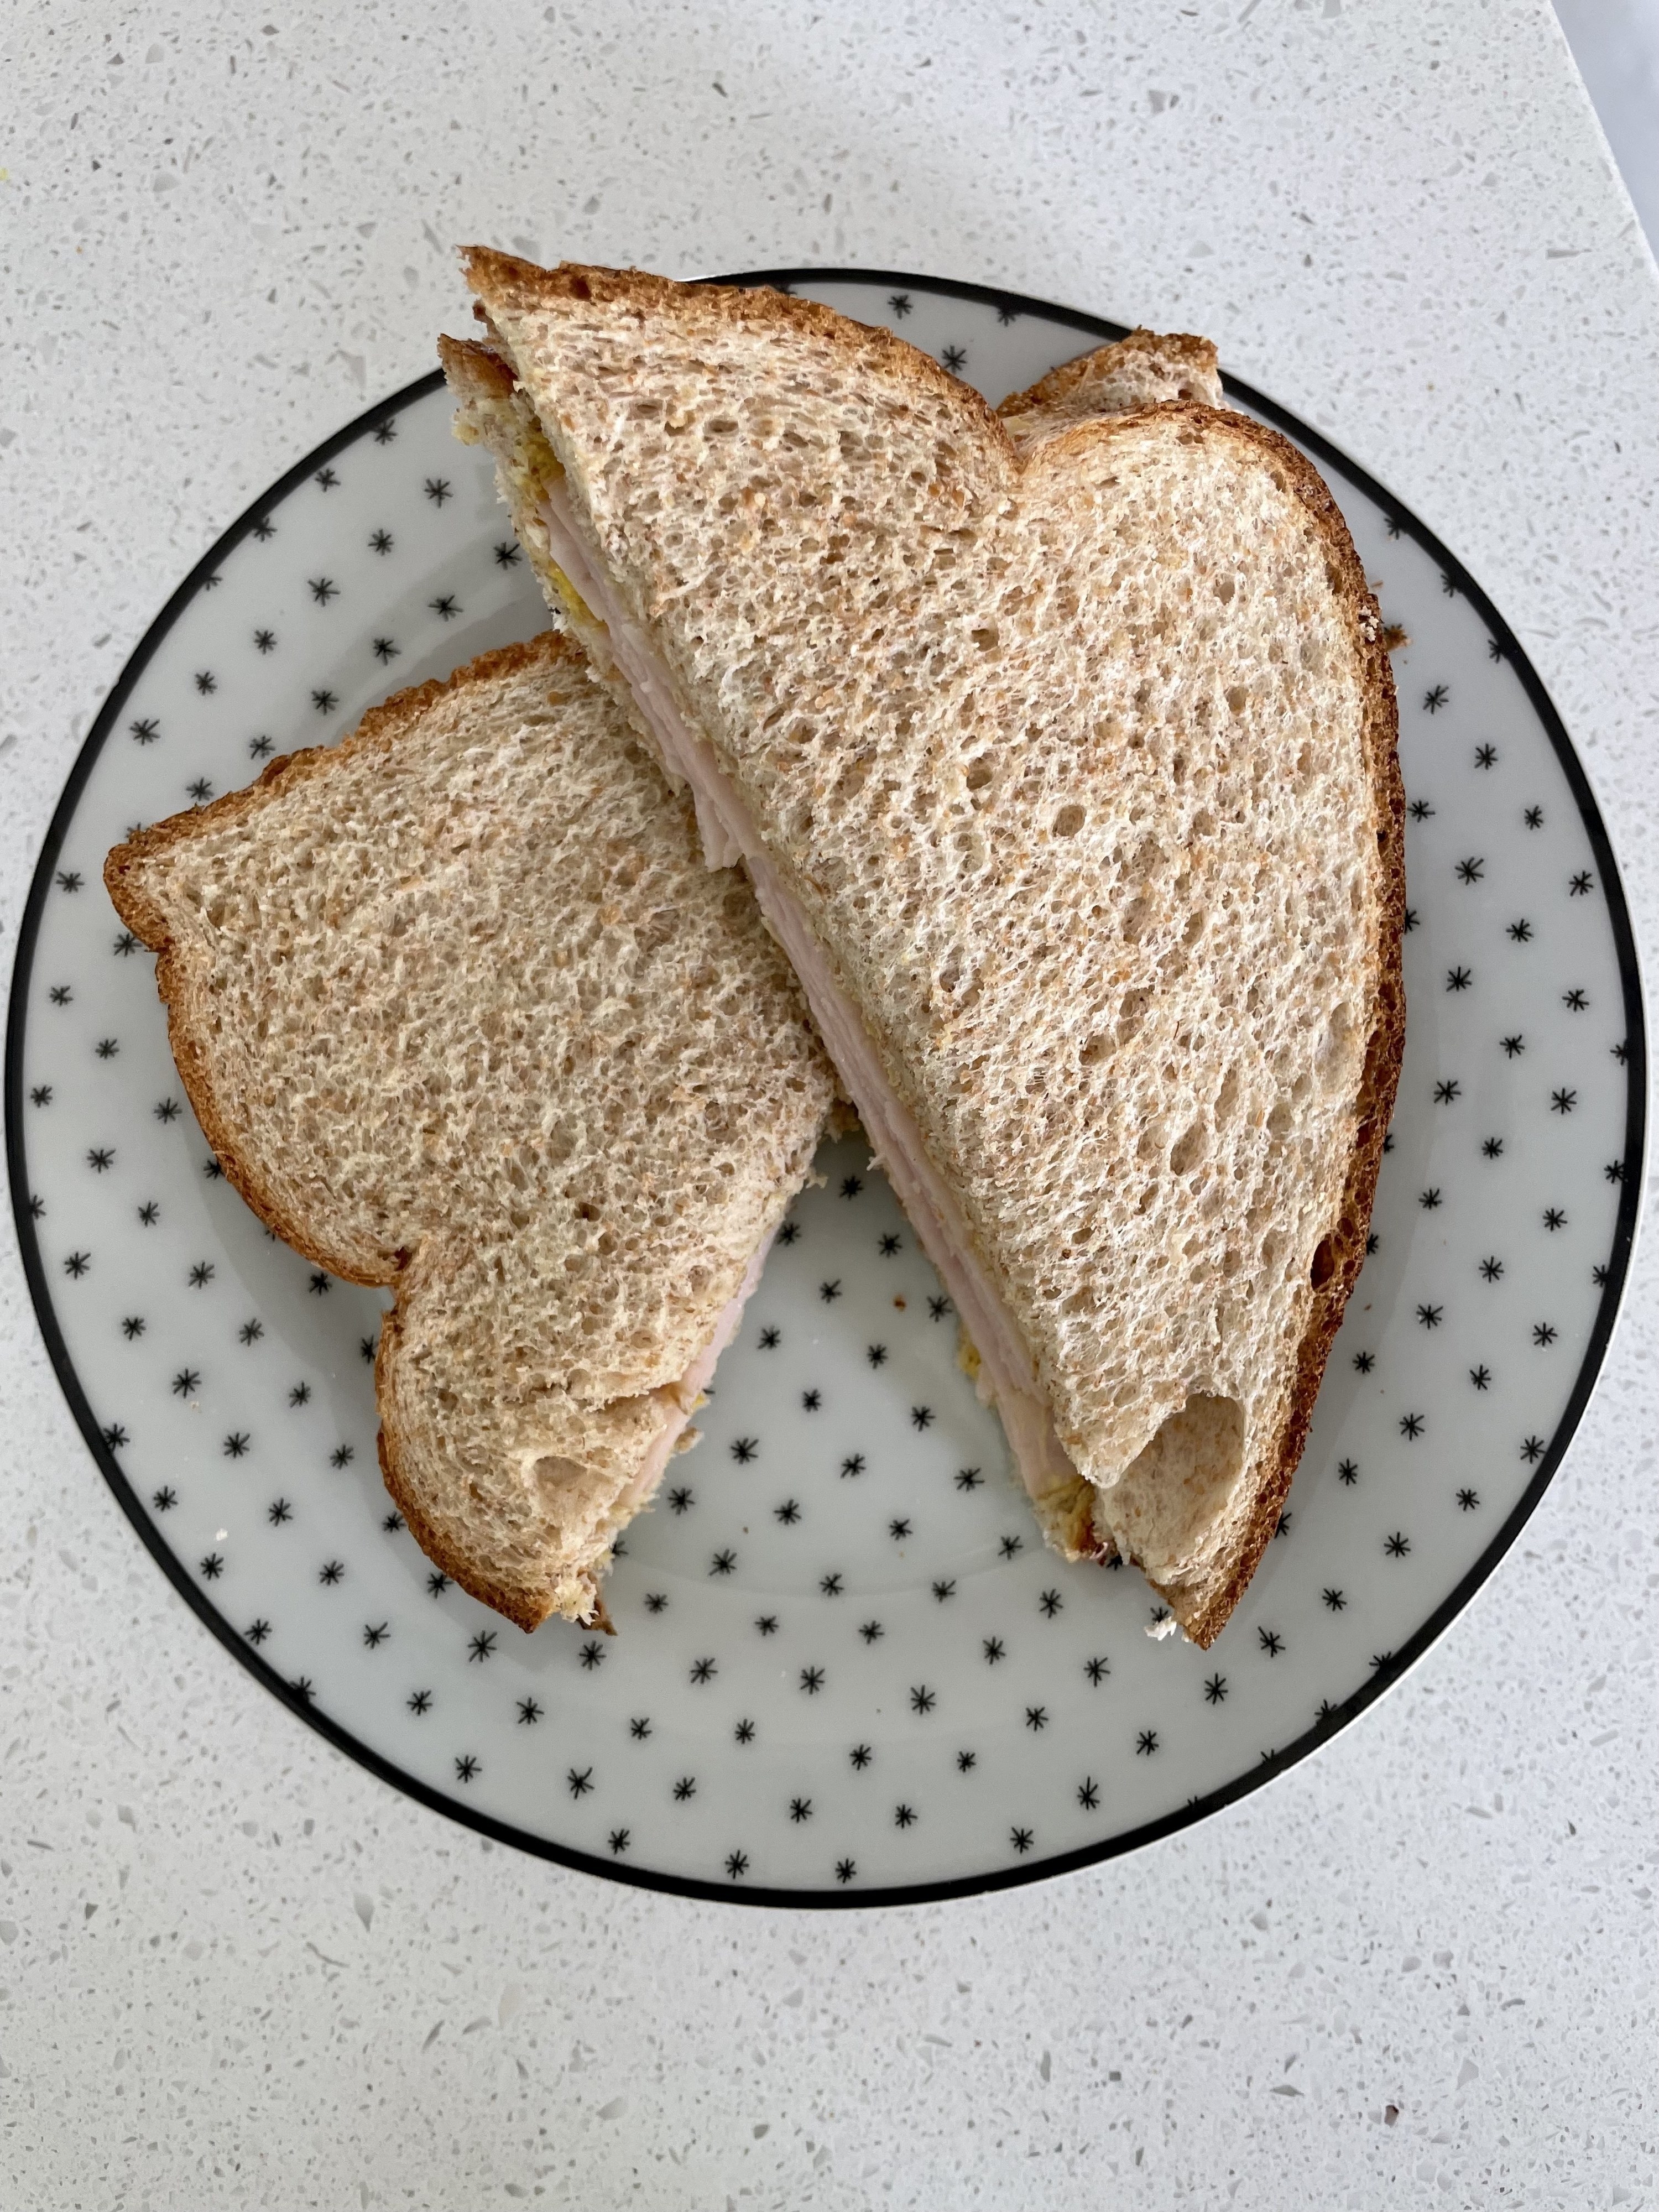 A homemade sandwich on a plate